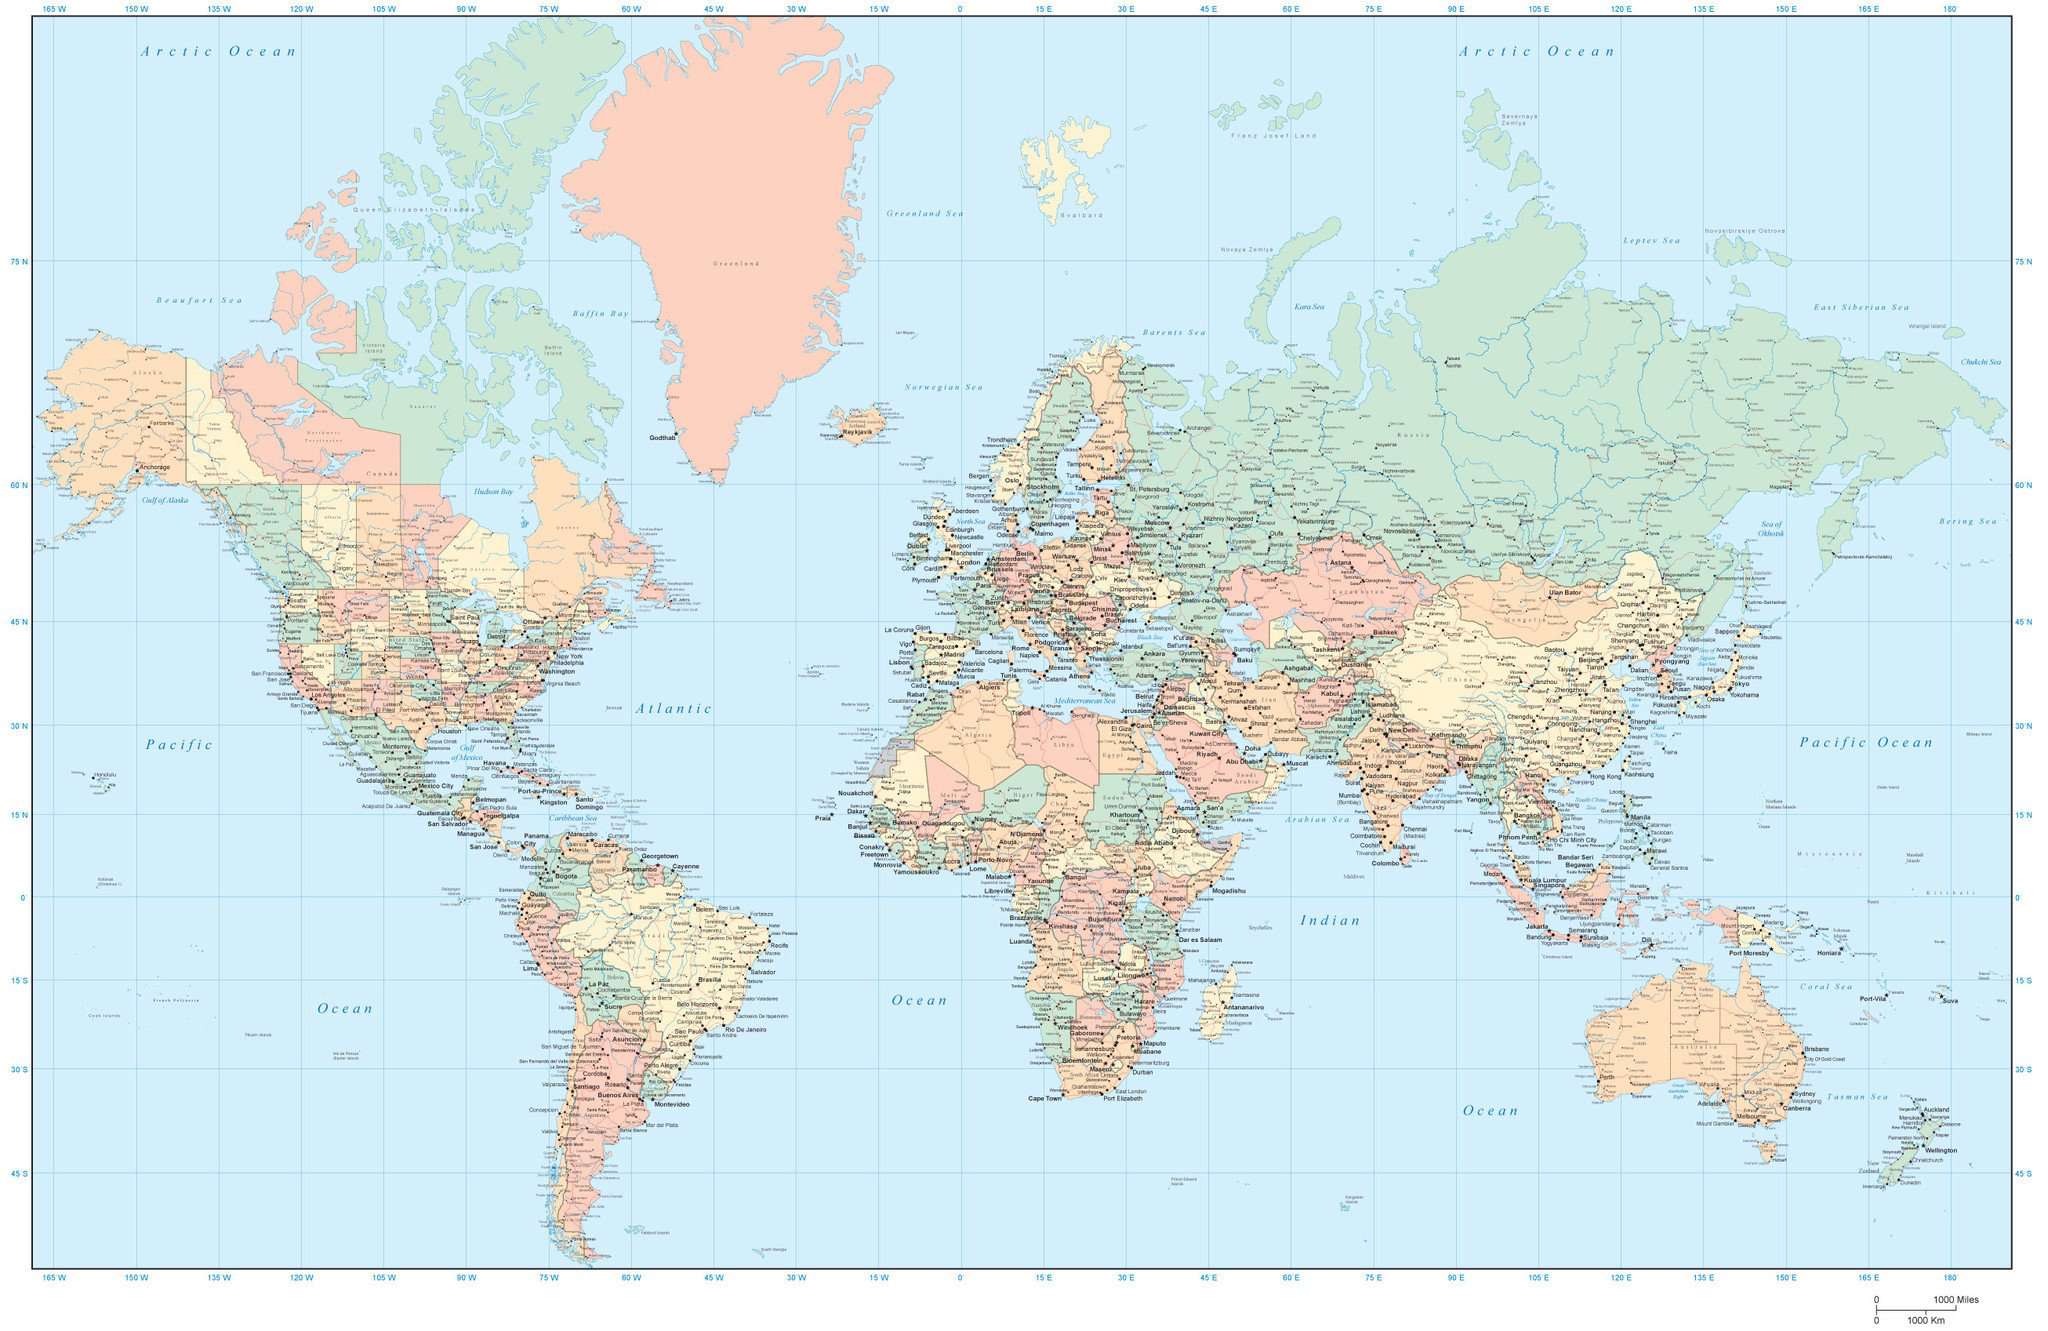 Digital Adobe Illustrator World Map - Europe Centered - High Detail